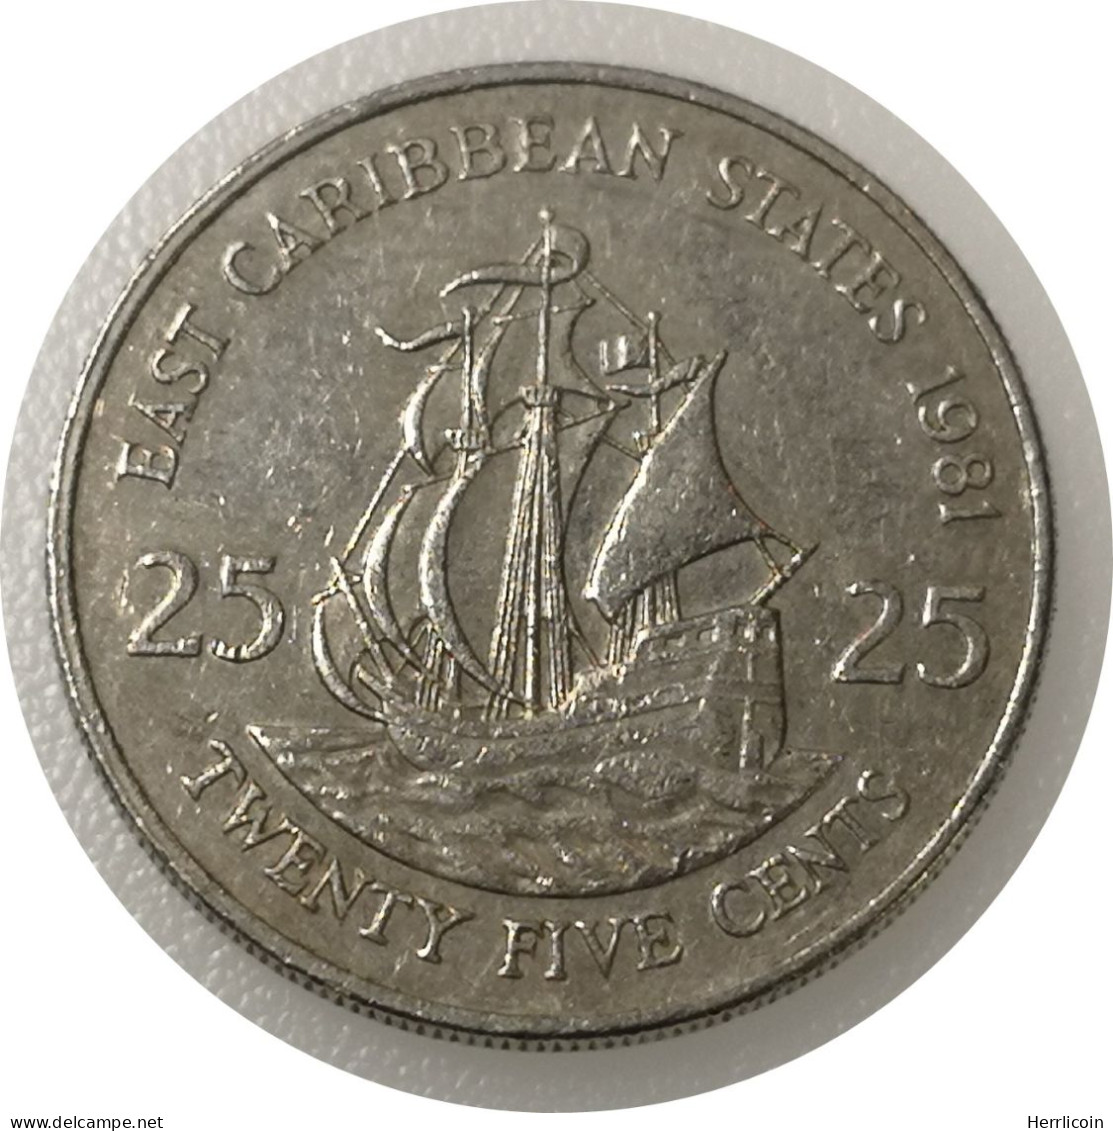 Monnaie Caraïbes - 1981 - 25 Cents Elizabeth II 2e Effigie - Britse Caribische Gebieden